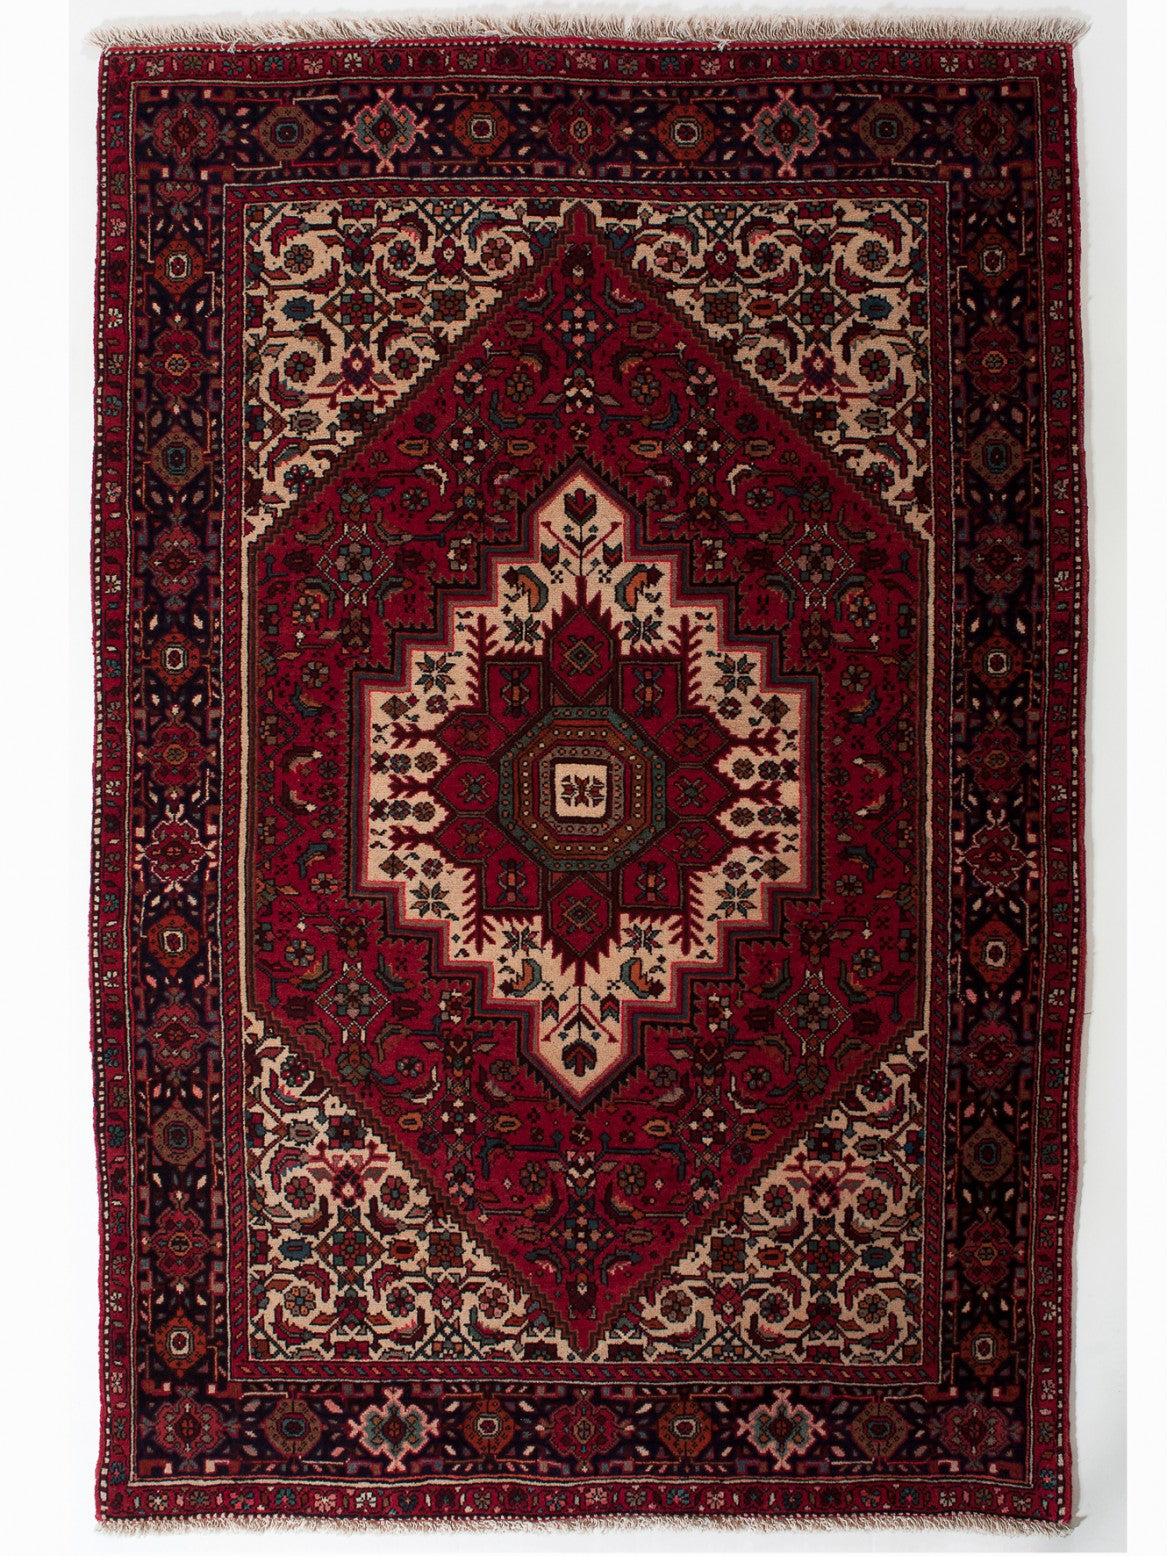 GOLTOK IRAN 159 x 100 cm